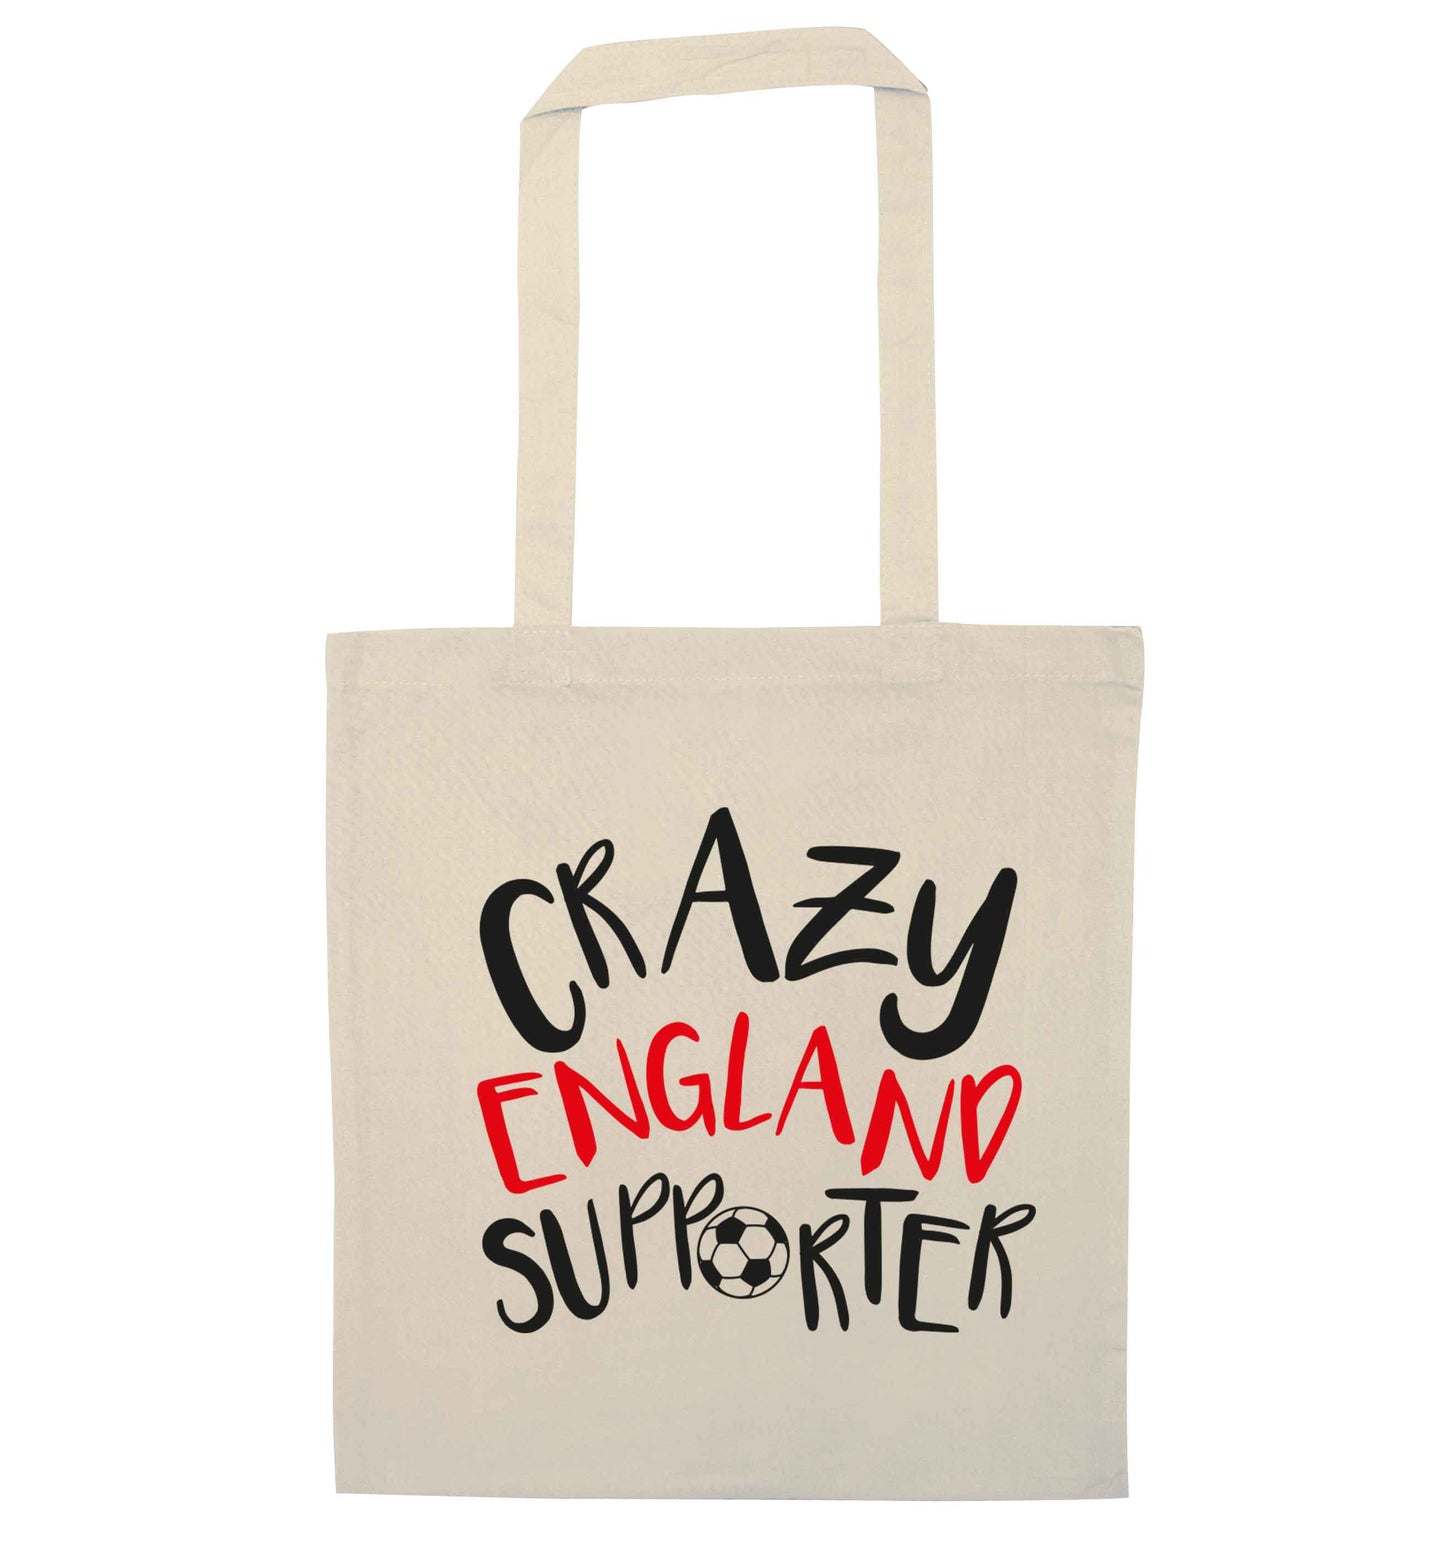 Crazy England supporter natural tote bag